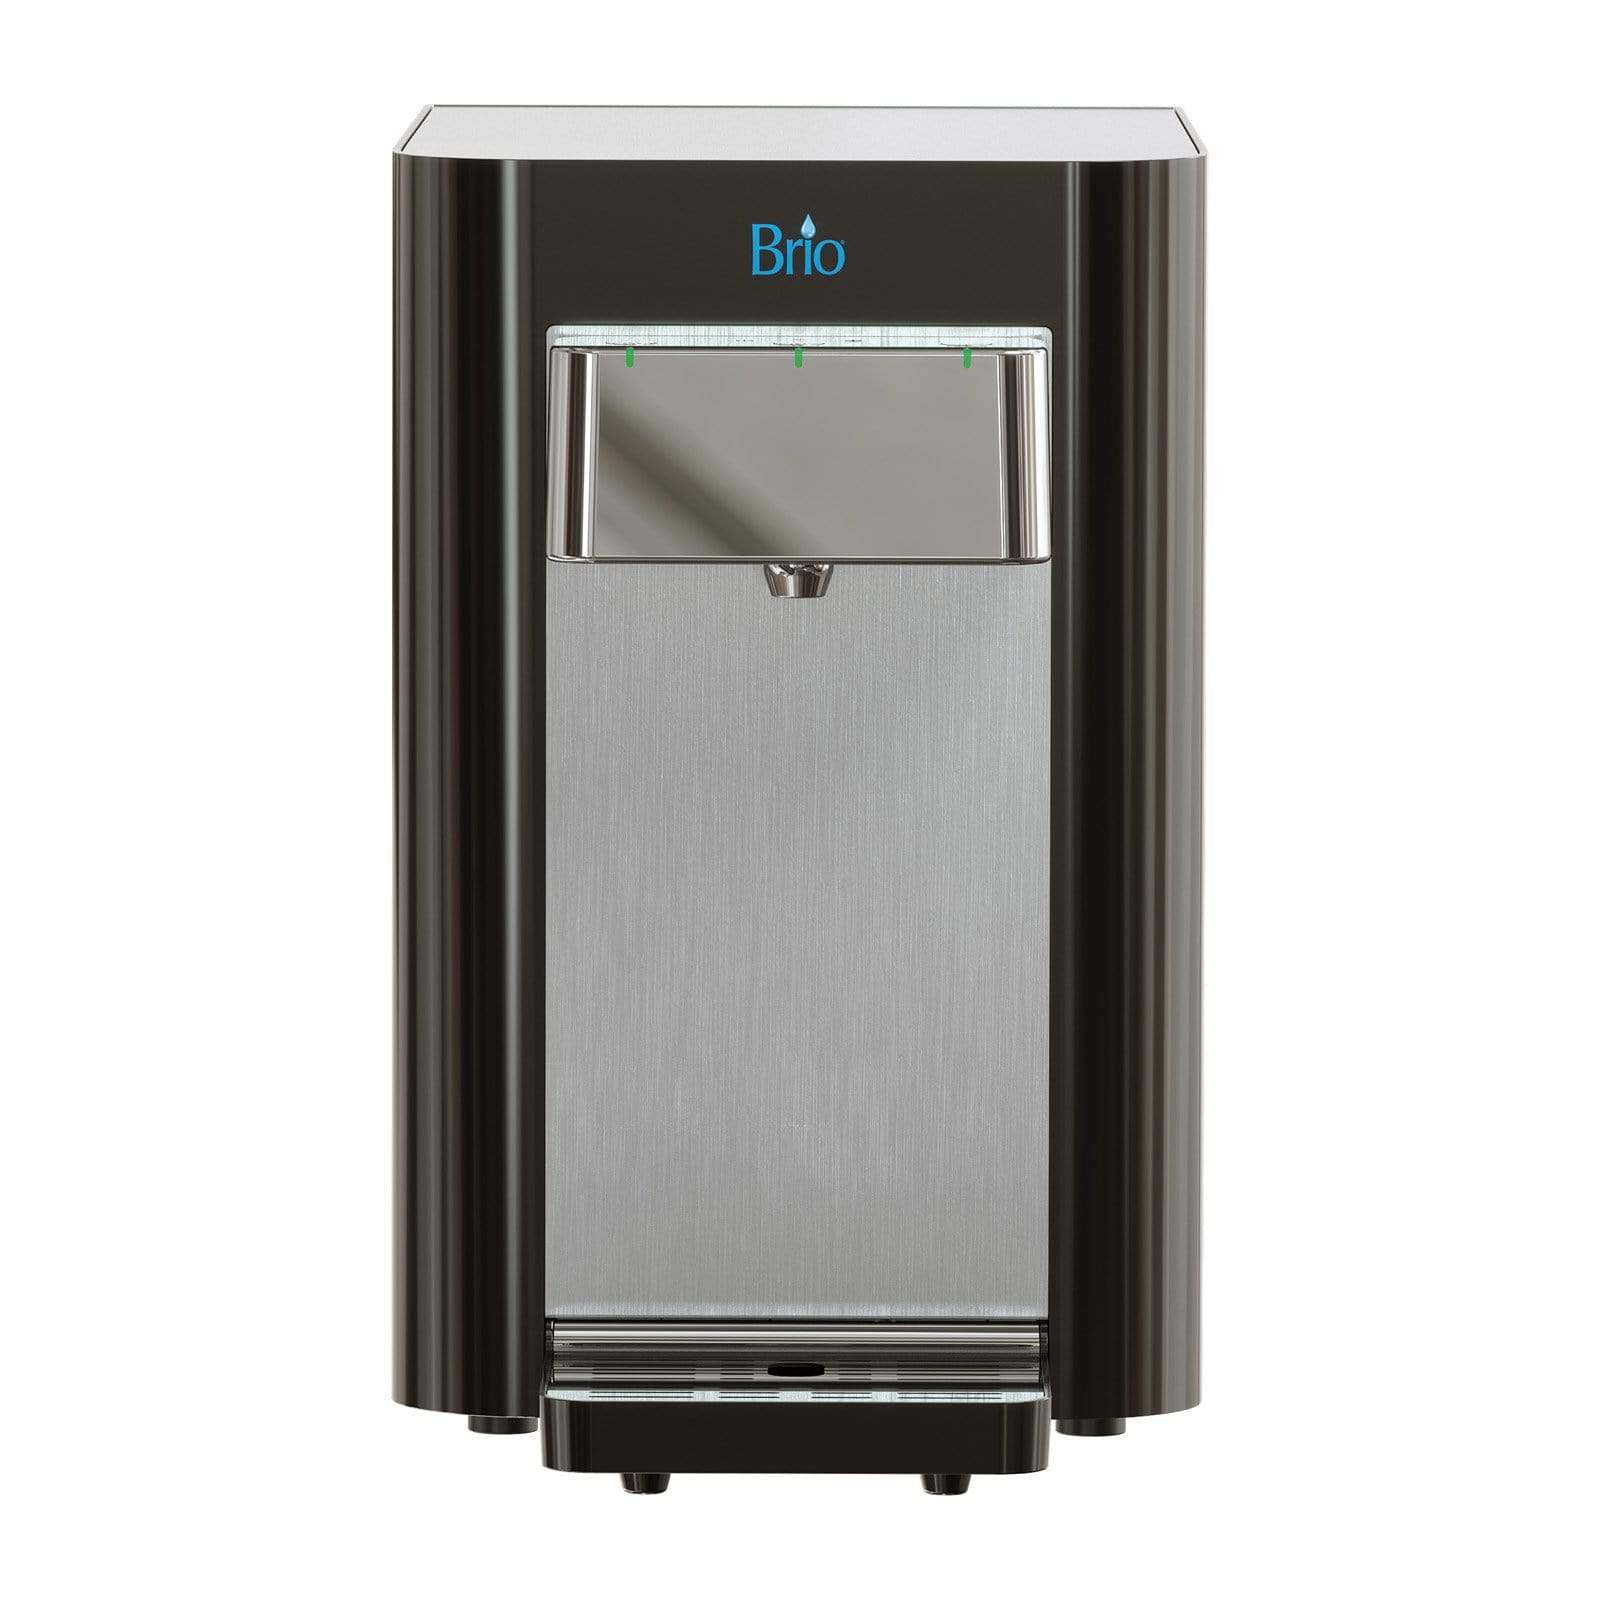 Brio 2-stage UV Countertop Water Cooler